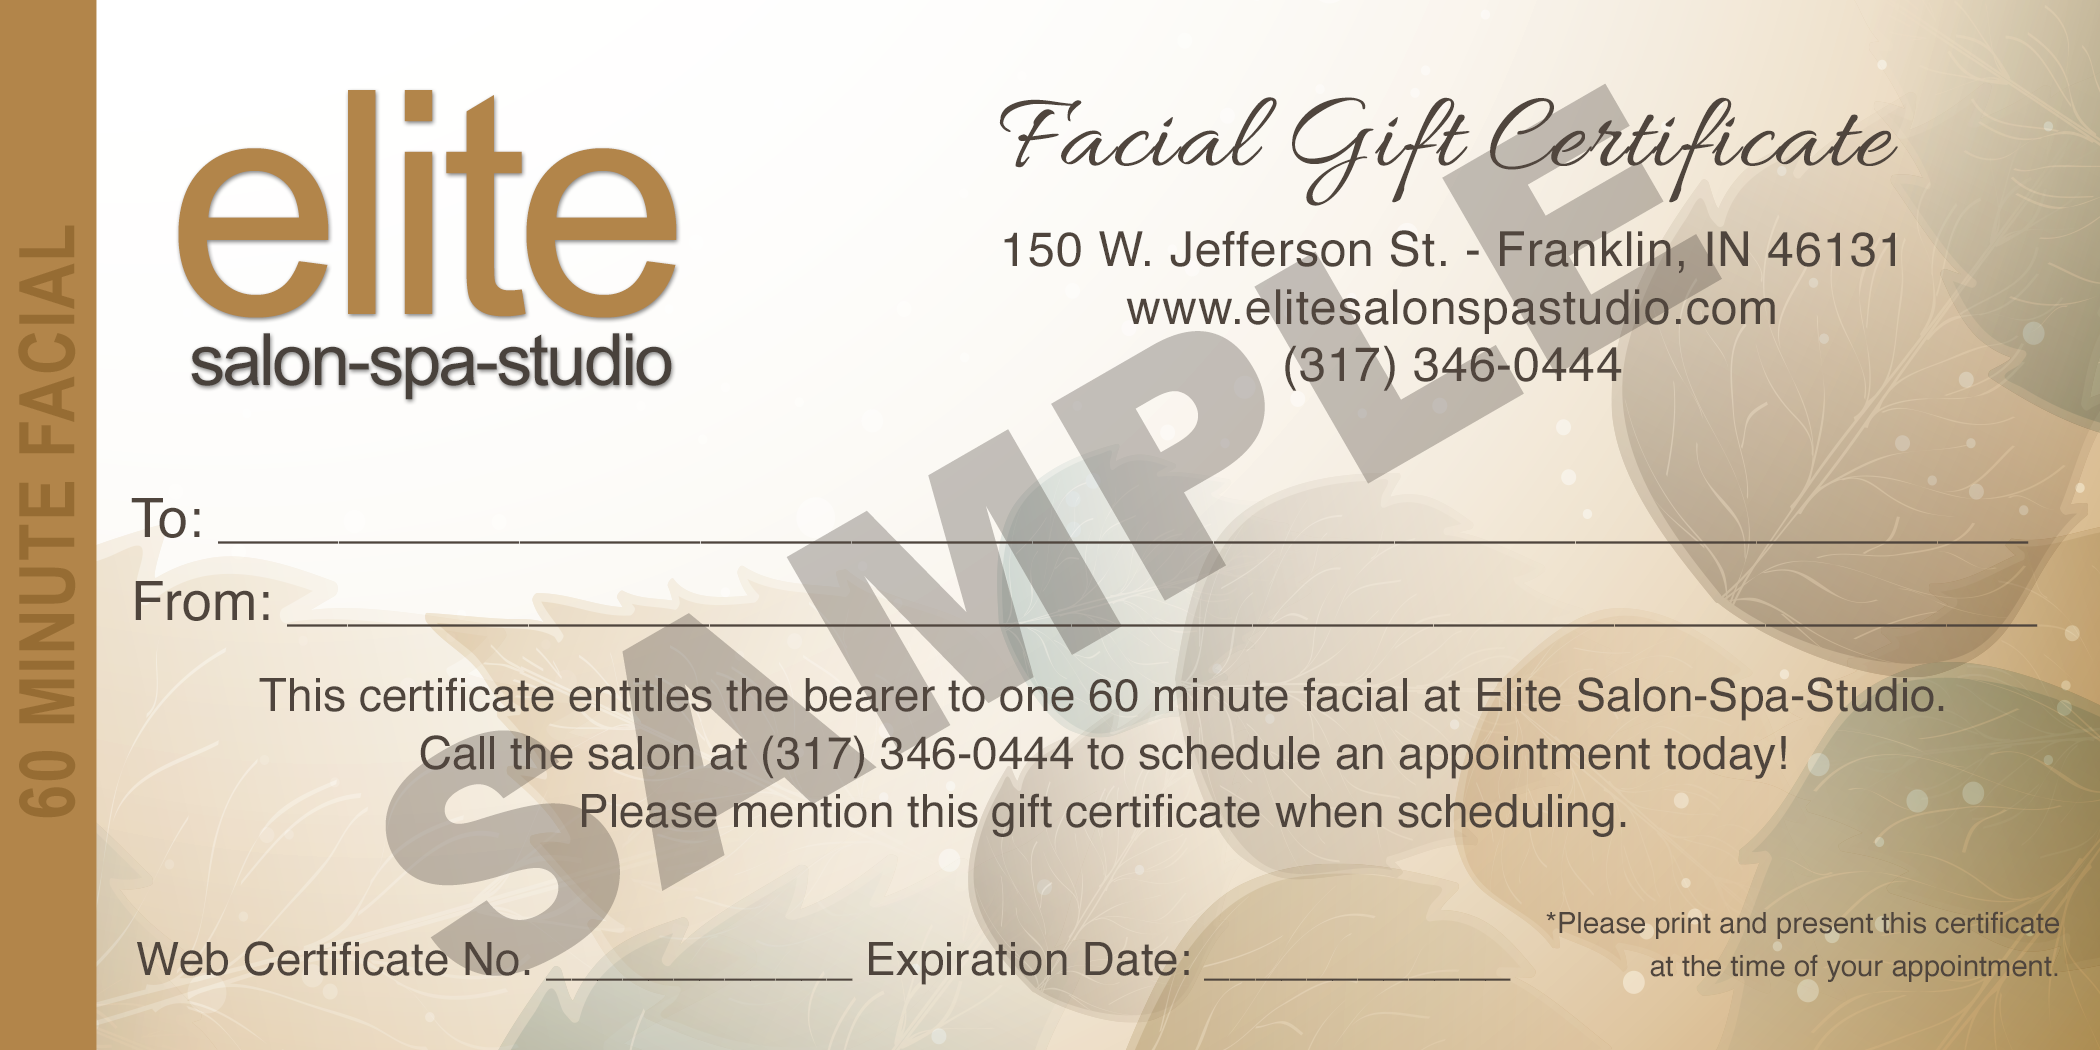 Facial Gift Certificate Sample Elite Salon Spa Studio